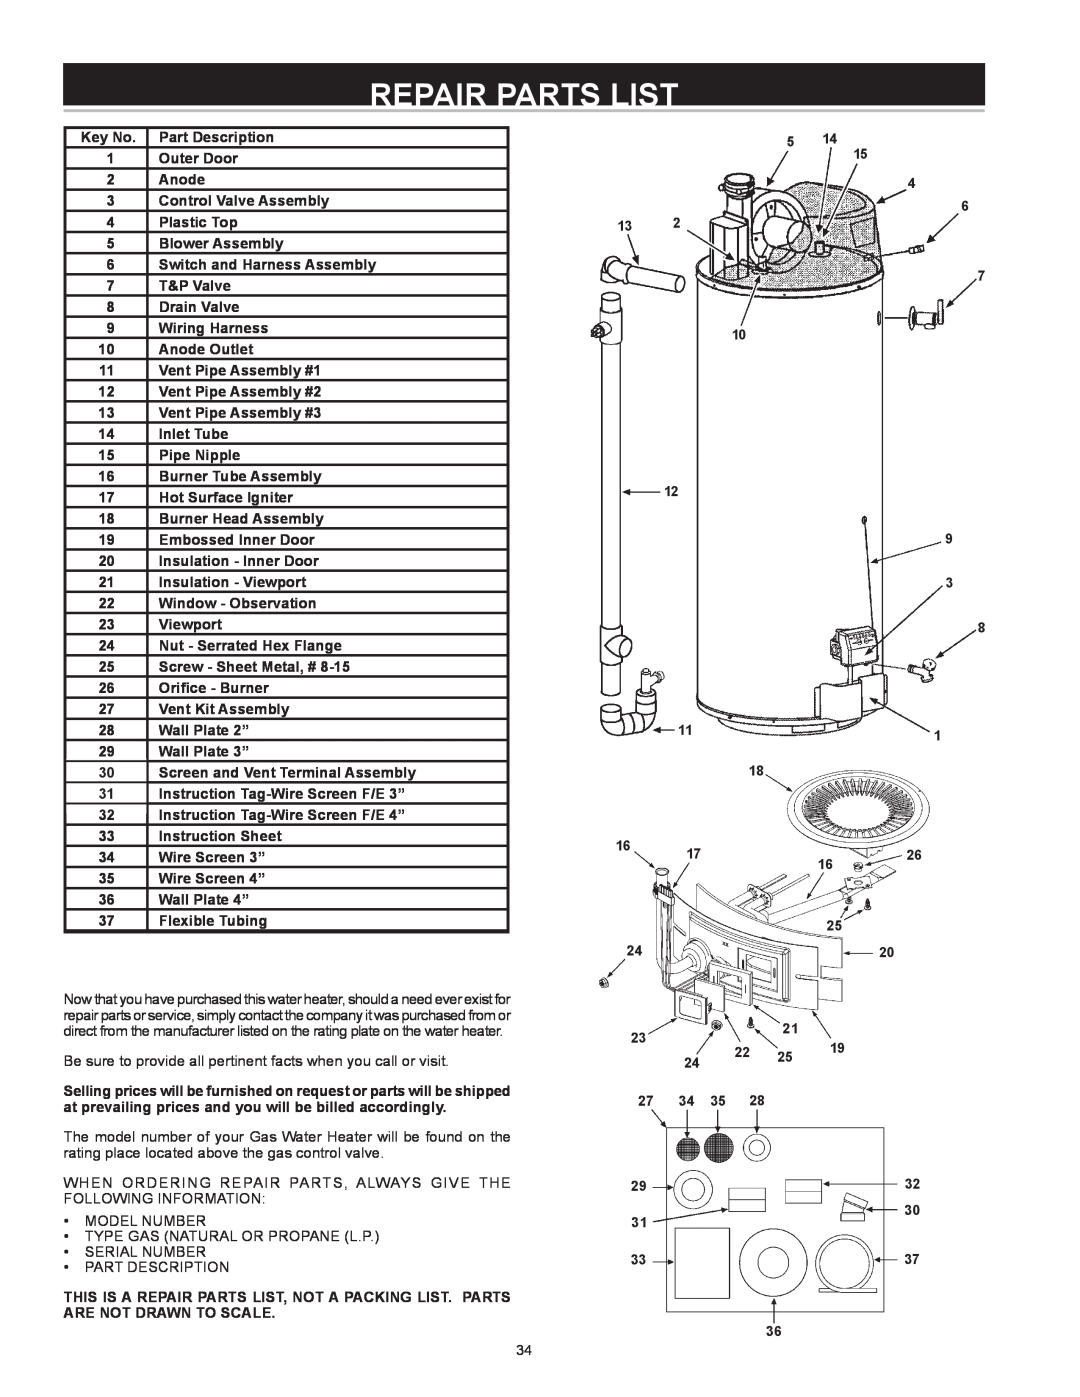 American Water Heater VG6250T76NV Series 100 Repair Parts List, Part Description, Outer Door, Anode, Plastic Top, Viewport 